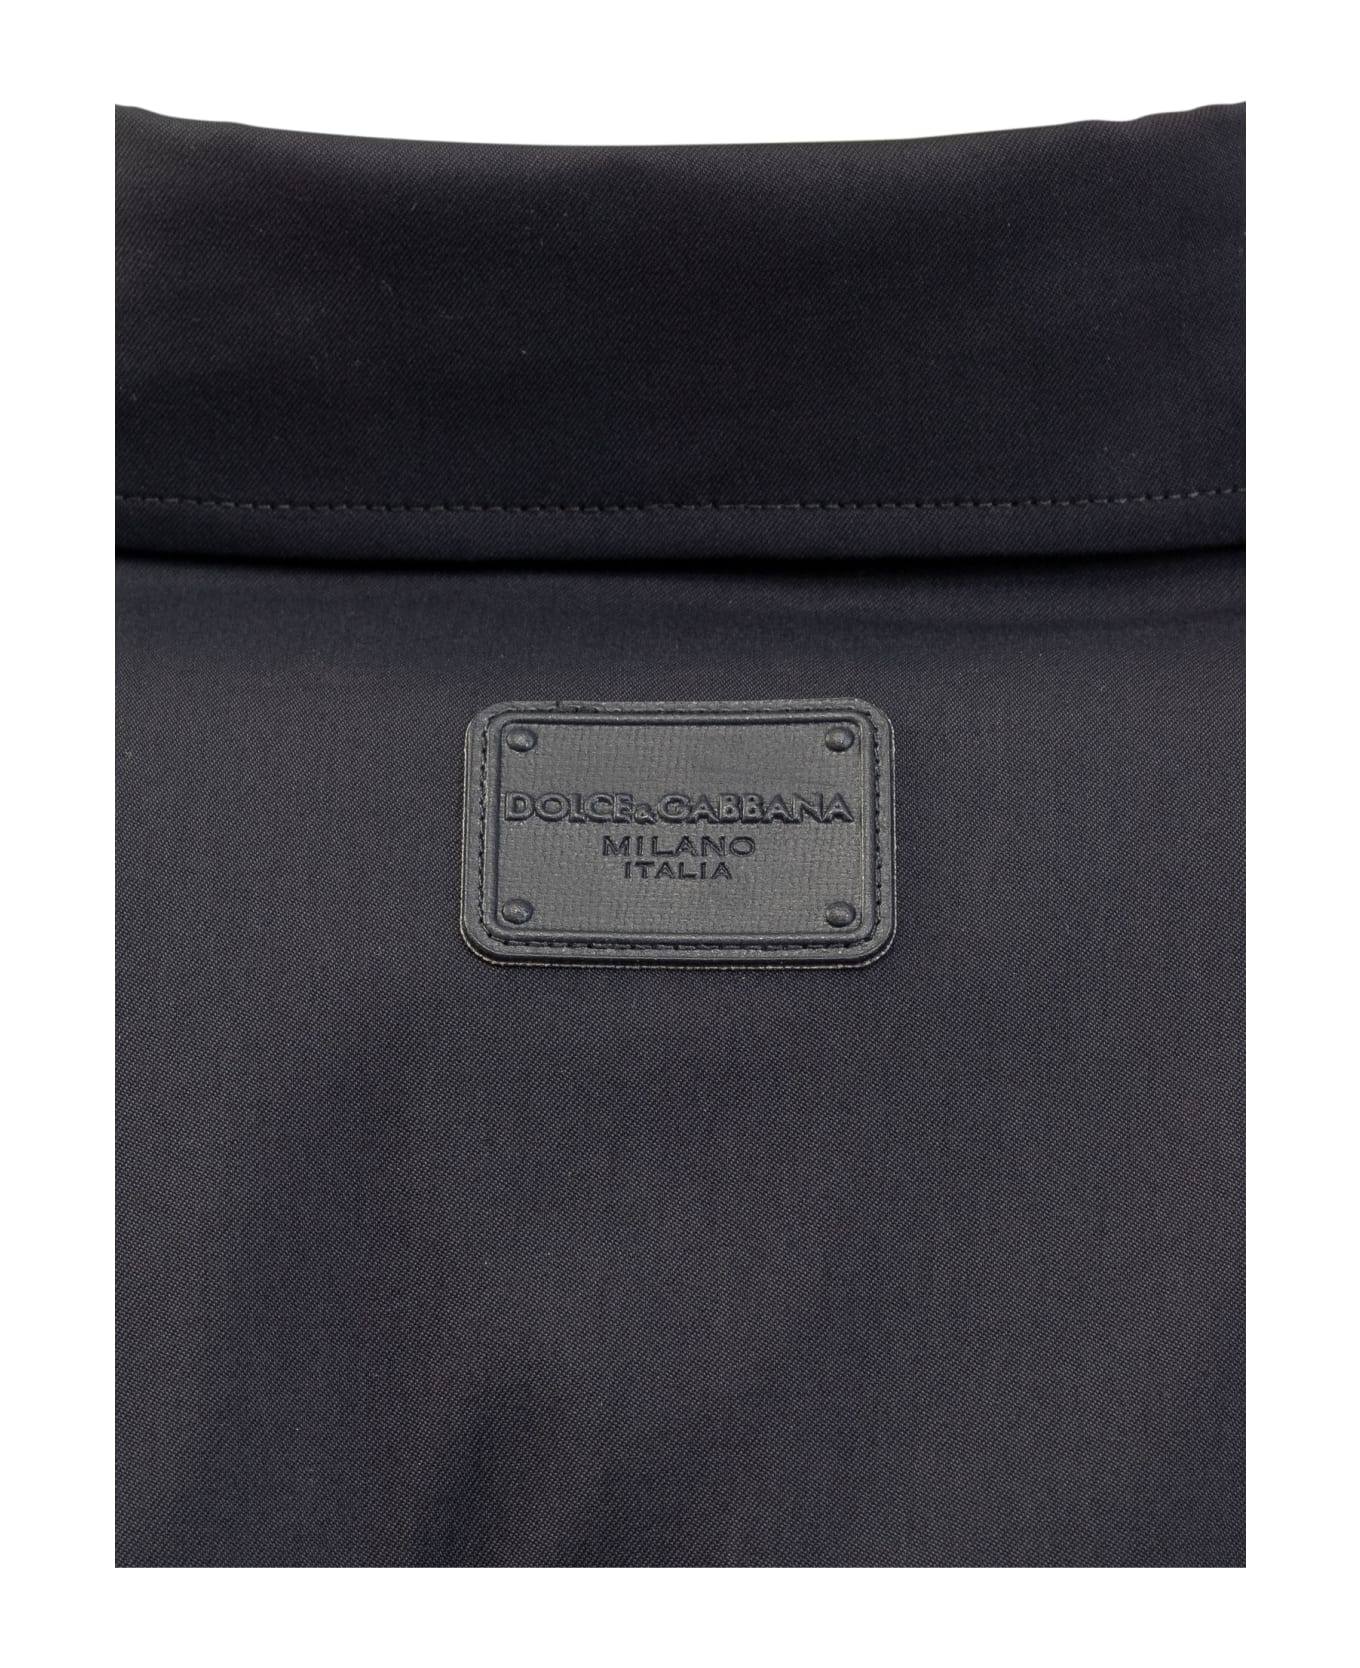 Dolce & Gabbana Technical Fabric Shirt - BLU SCURISSIMO 5